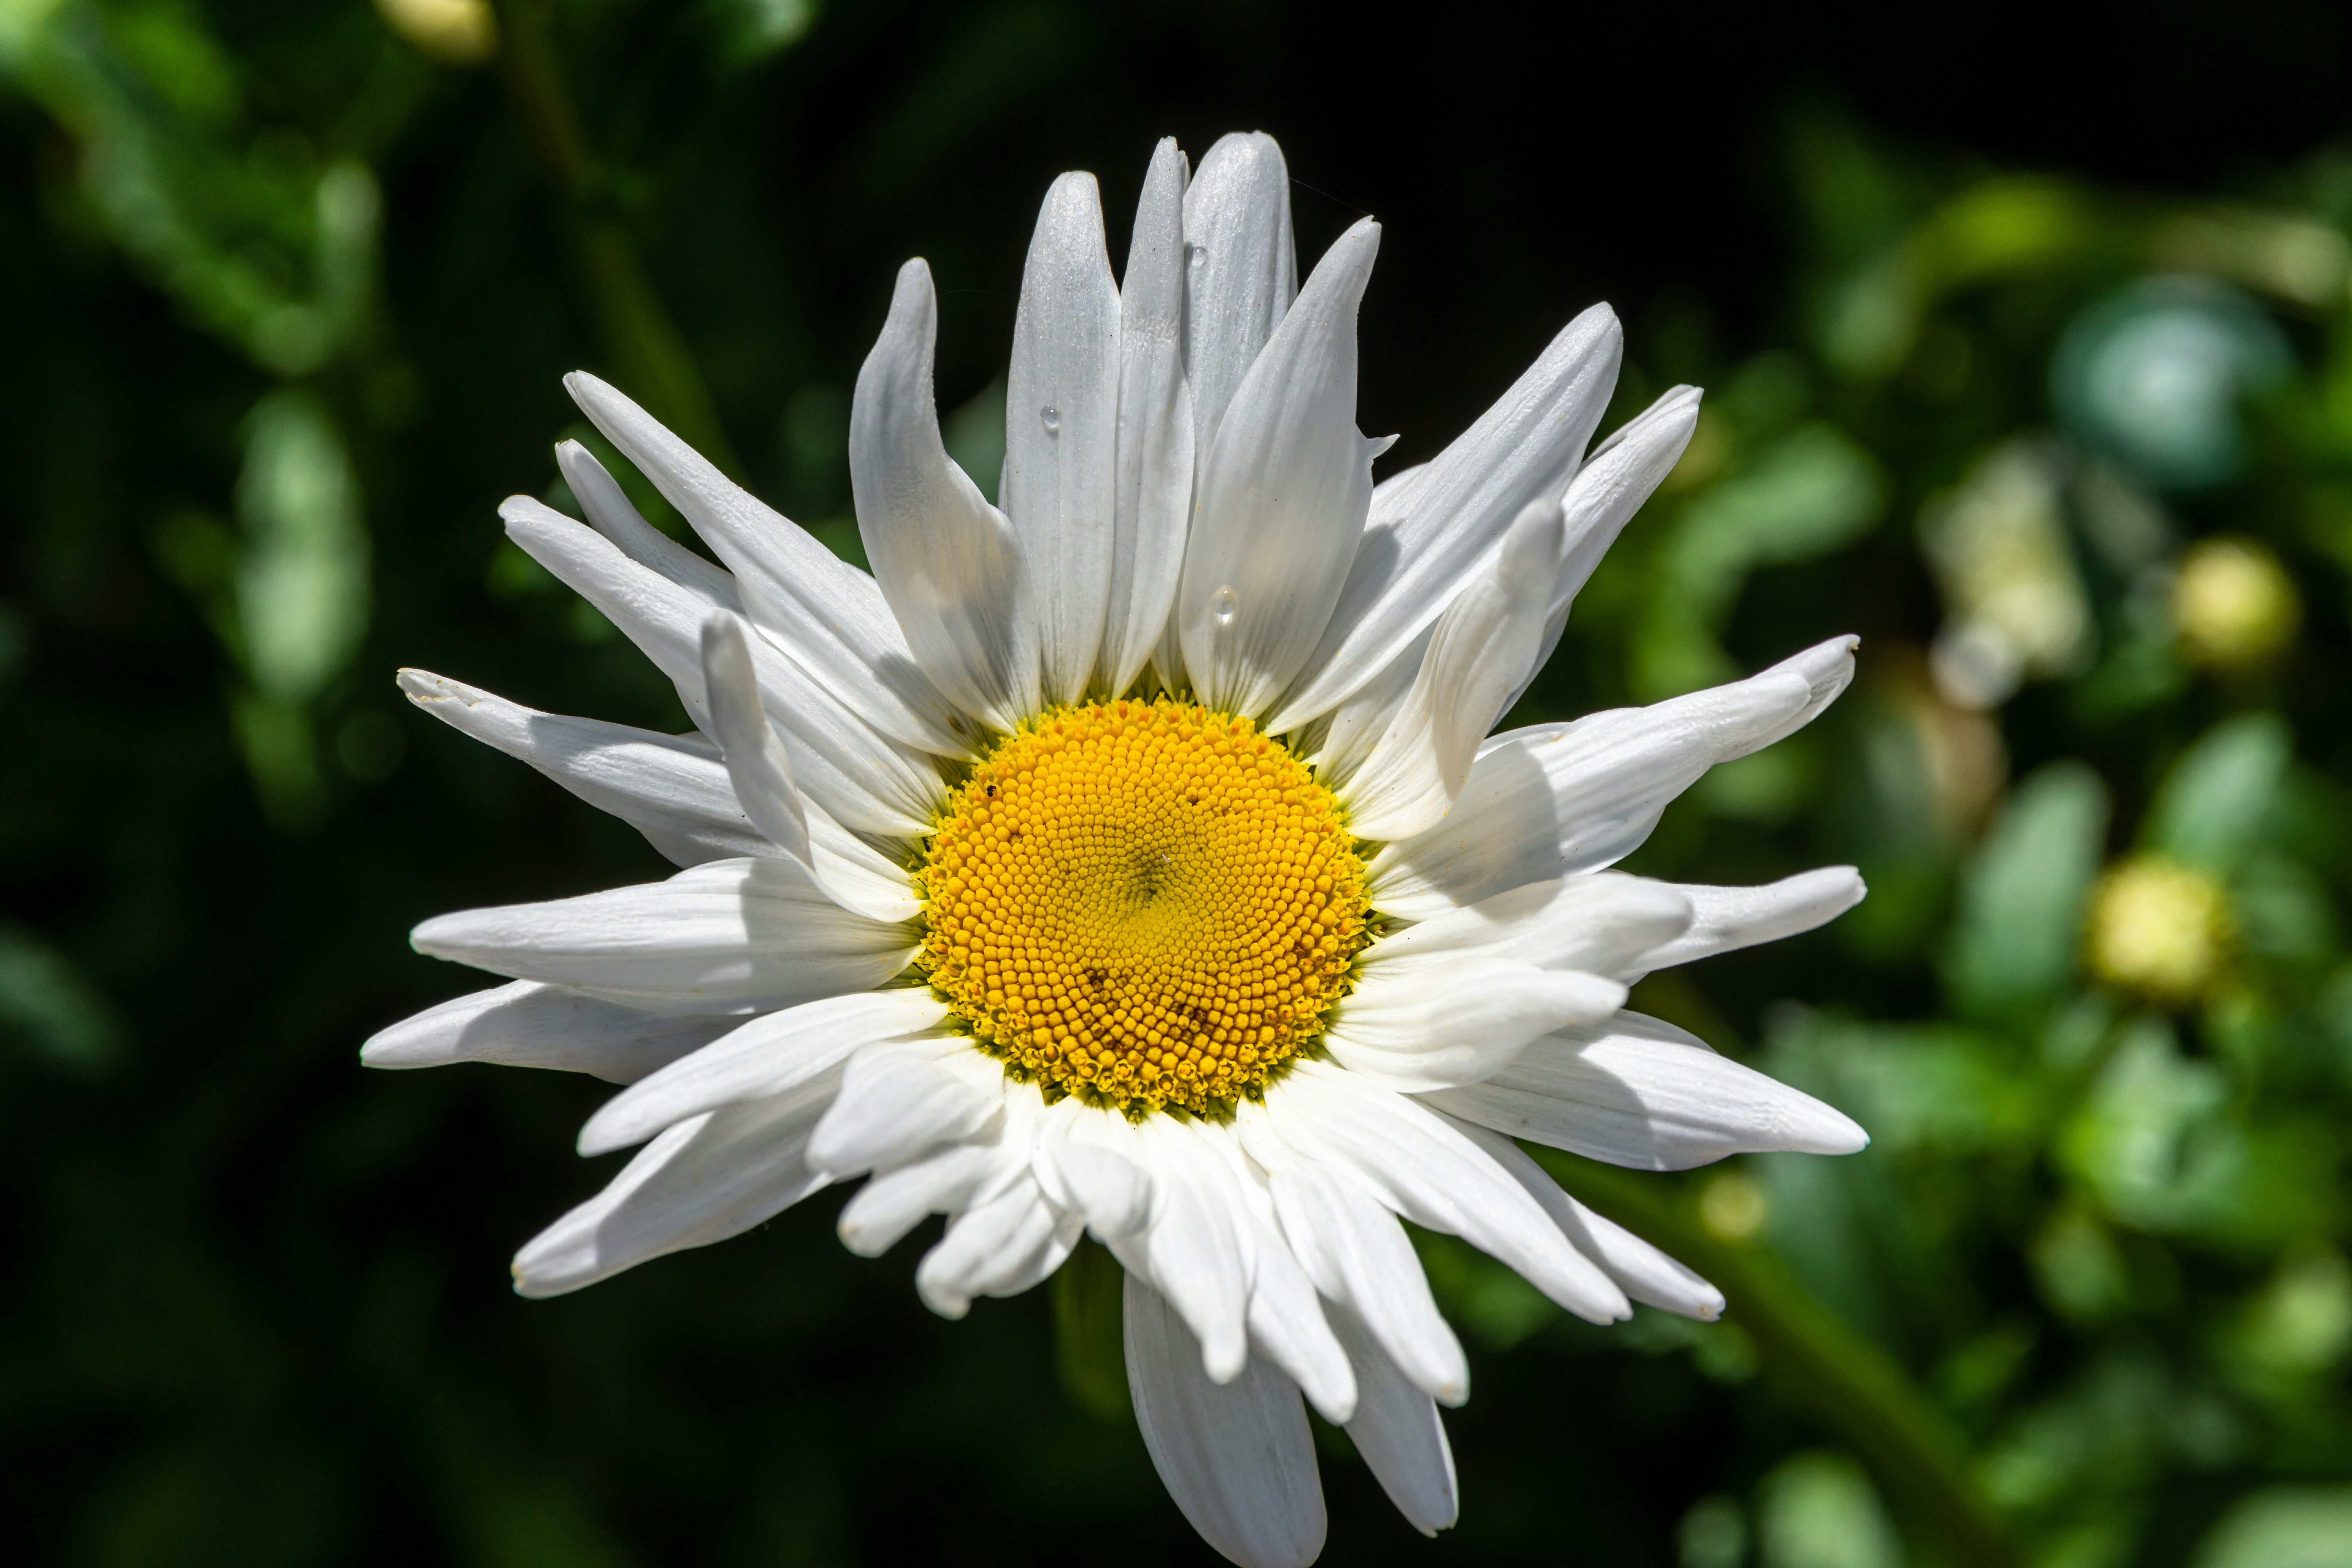 flower heavy with pollen